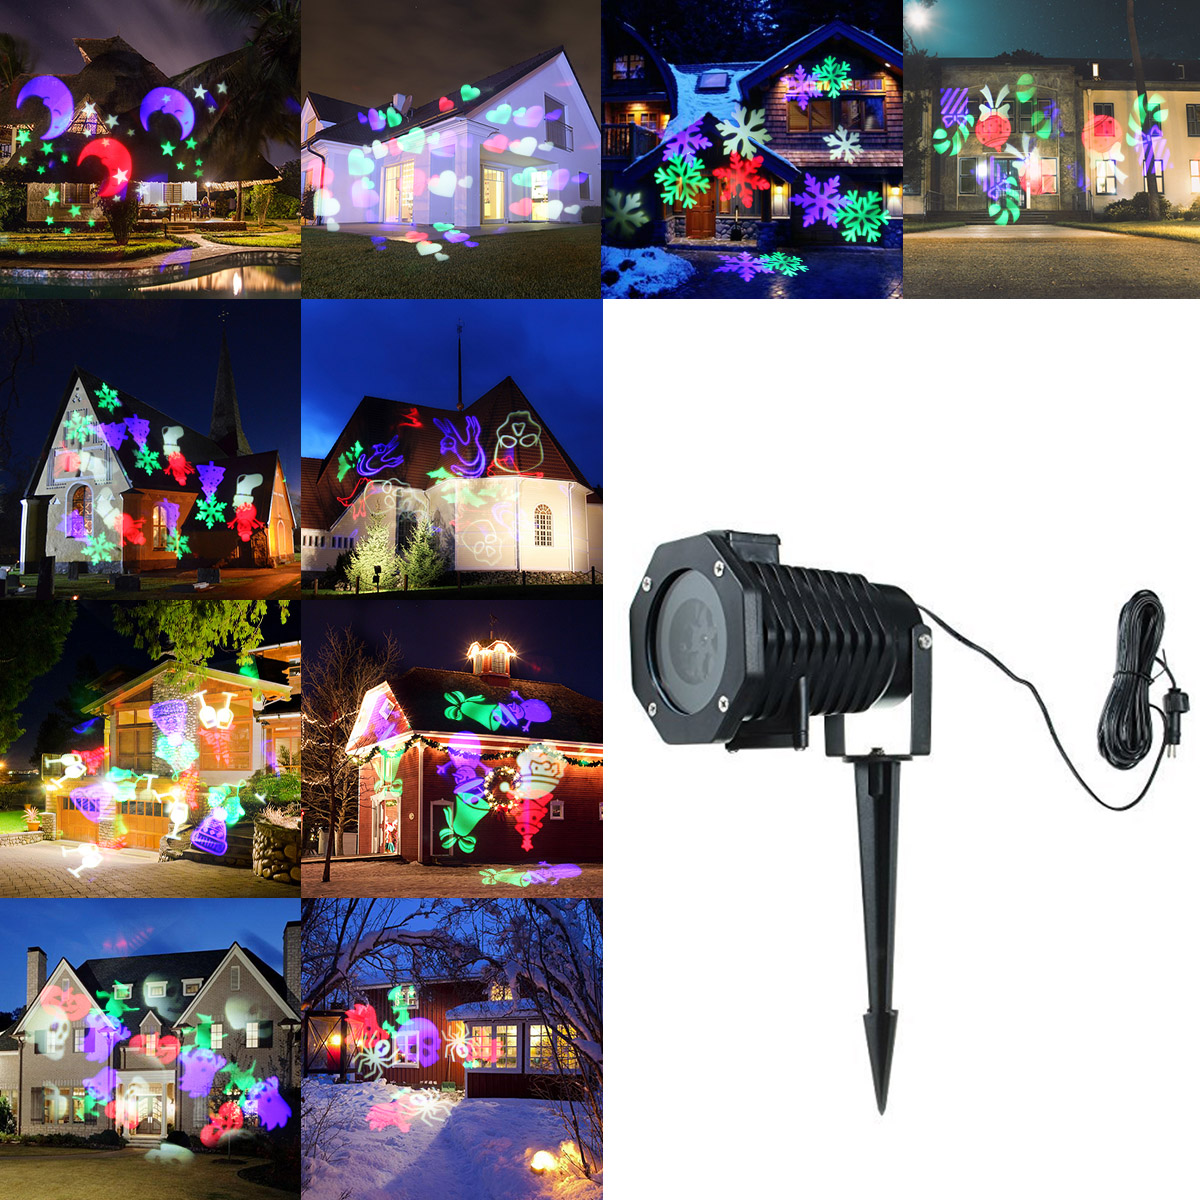 10-Pattern-LED-Landscape-Projector-Light-Halloween-Christmas-Party-UK-EU-US-AU-Plug-1160920-1